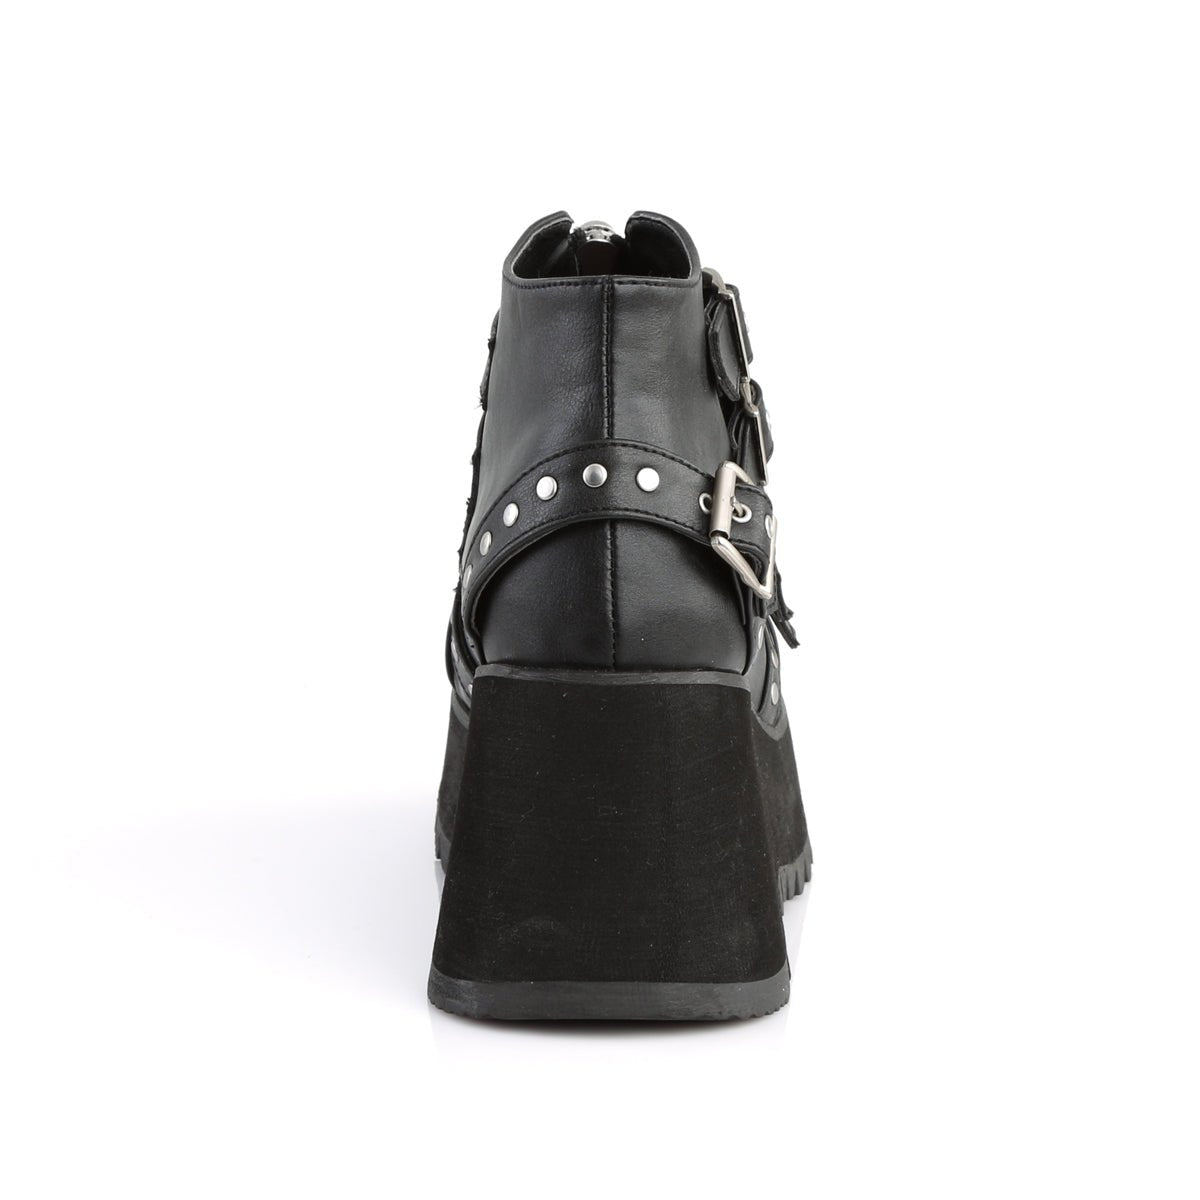 Too Fast | Demonia Scene 30 | Black Vegan Leather Women's Ankle Boots